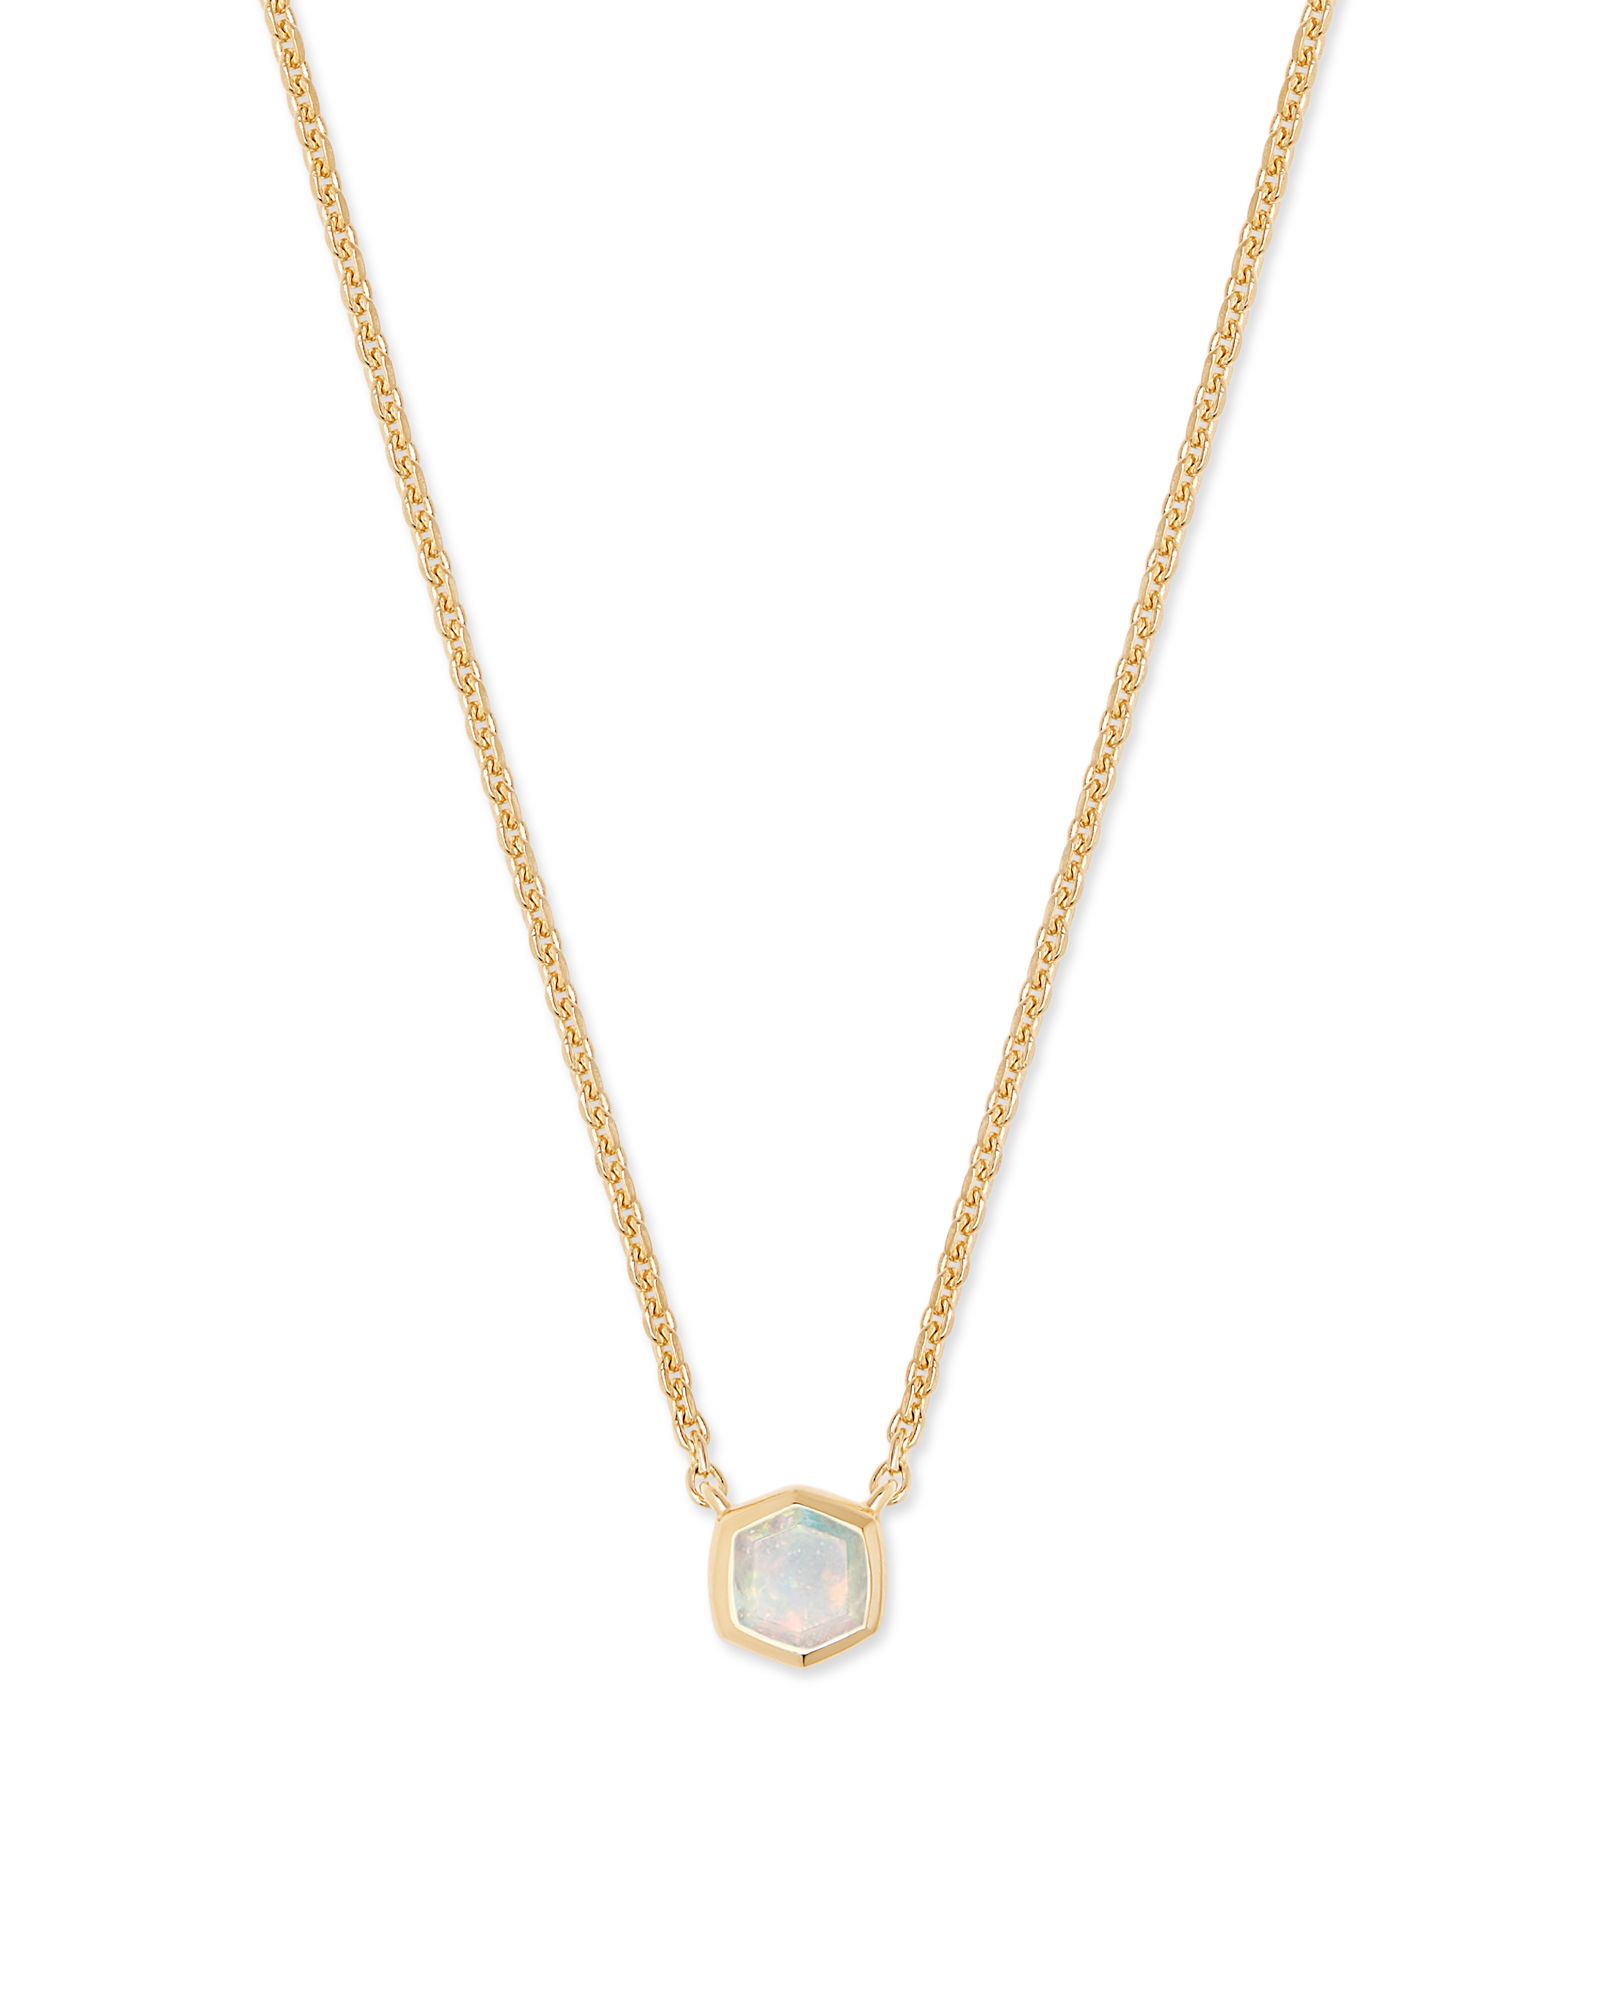 Davie 18K Gold Vermeil Pendant Necklace in White Ethiopian Opal | Kendra Scott | Kendra Scott